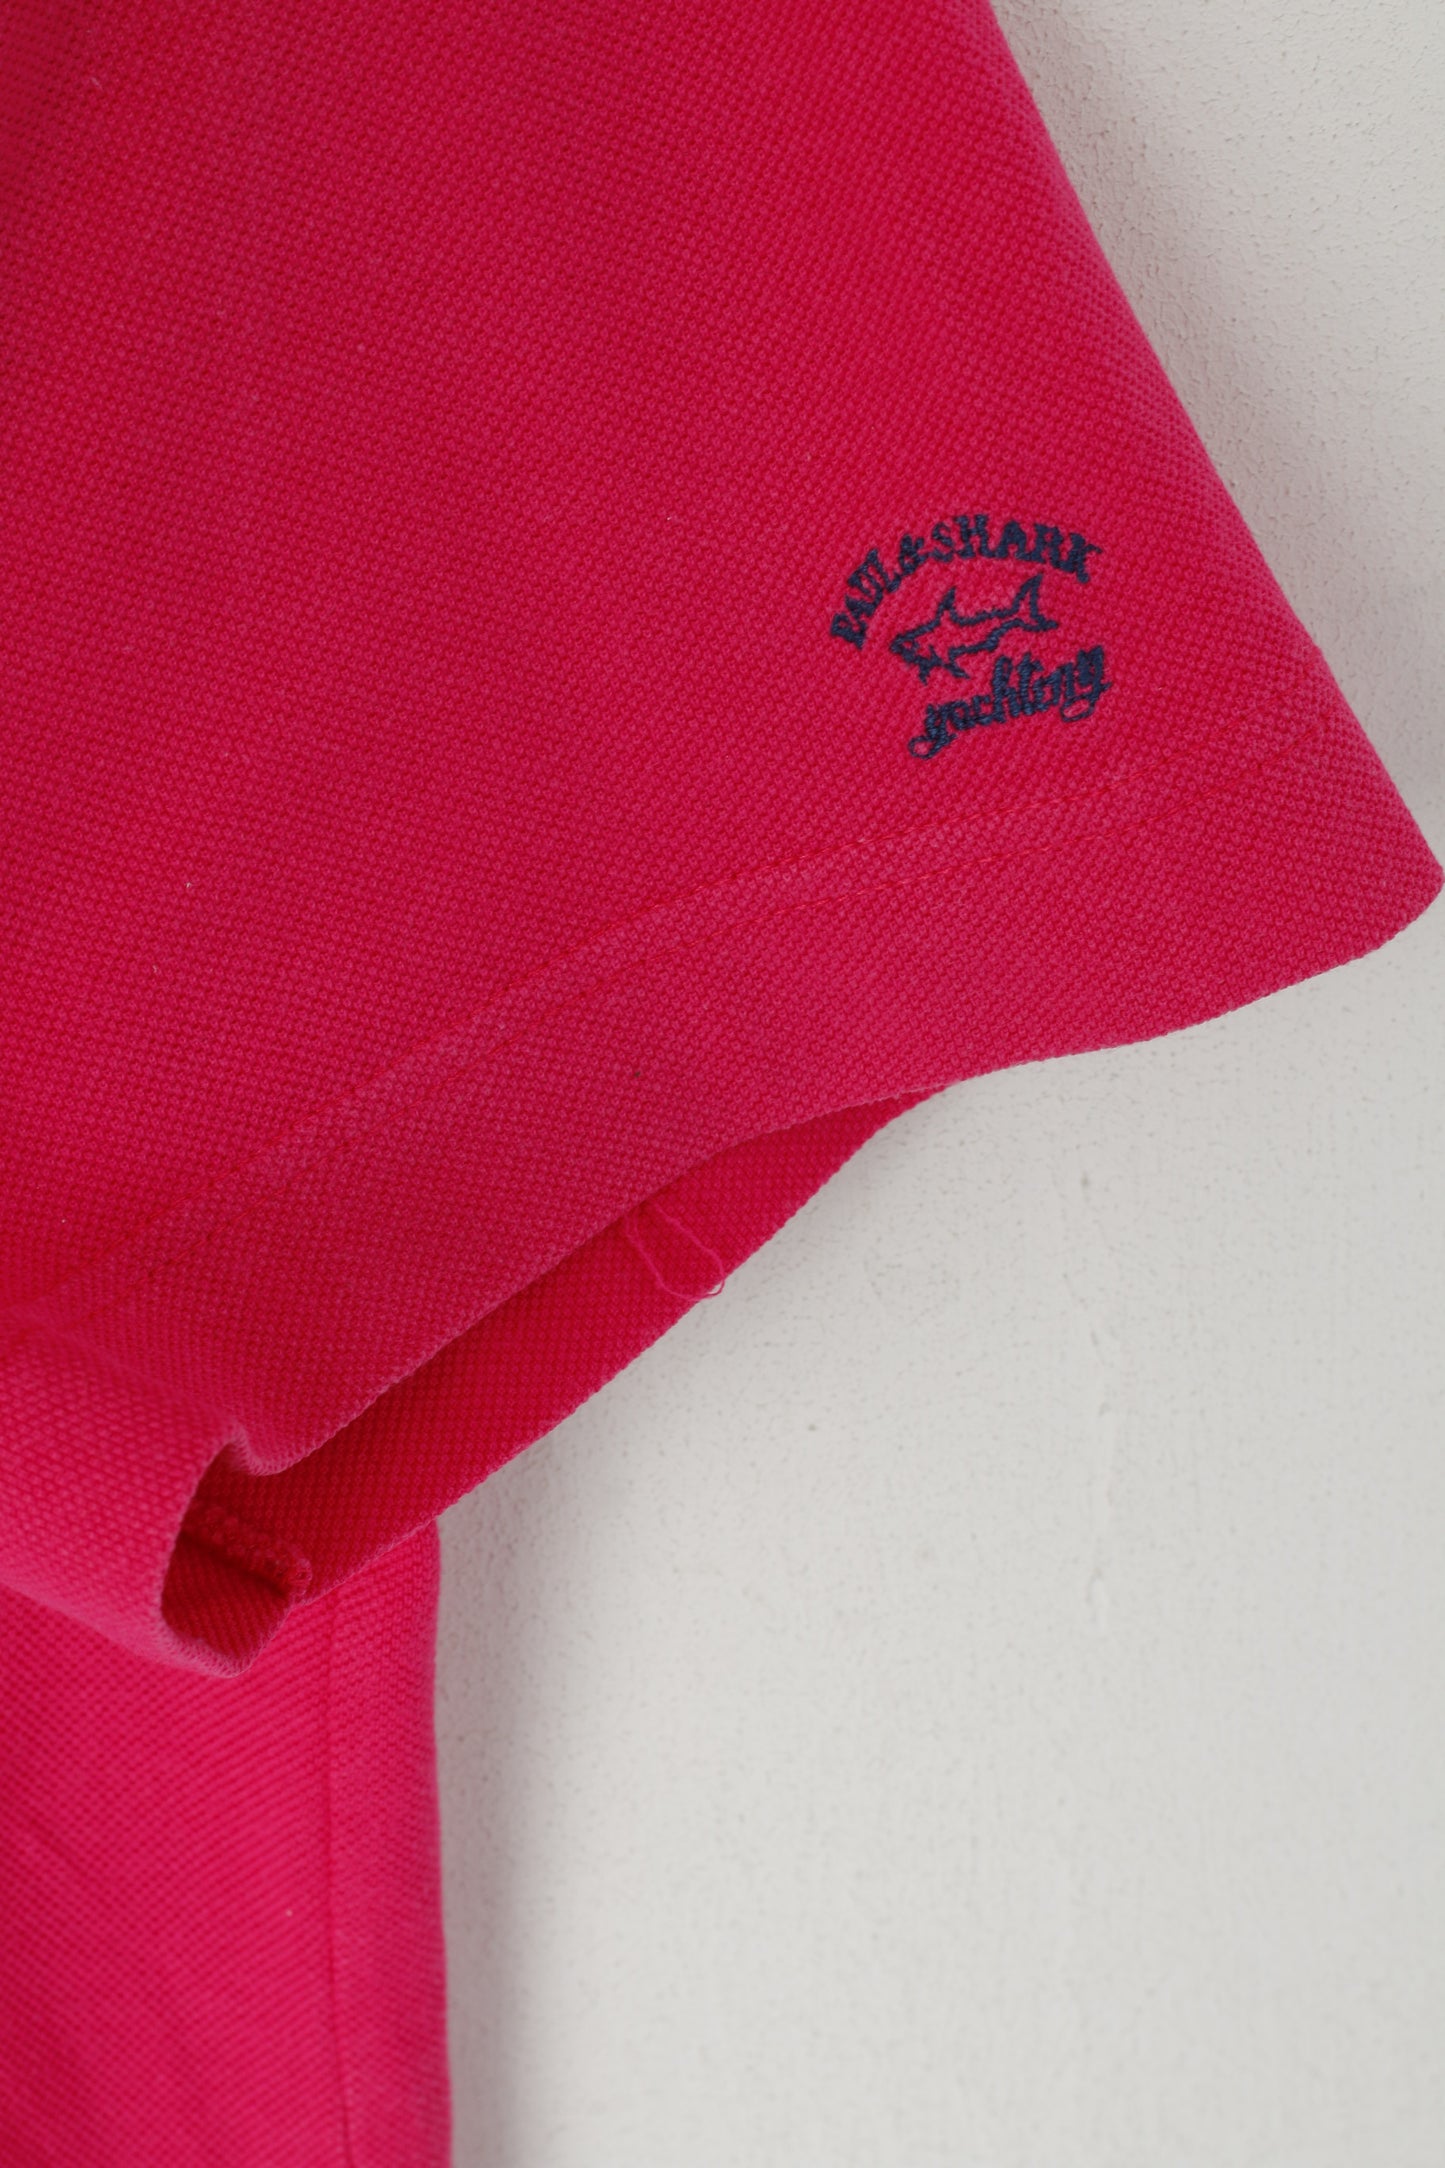 Paul & Shark Men 2XL Polo Shirt Pink Cotton Newport Sydney World Yachting Cup Top